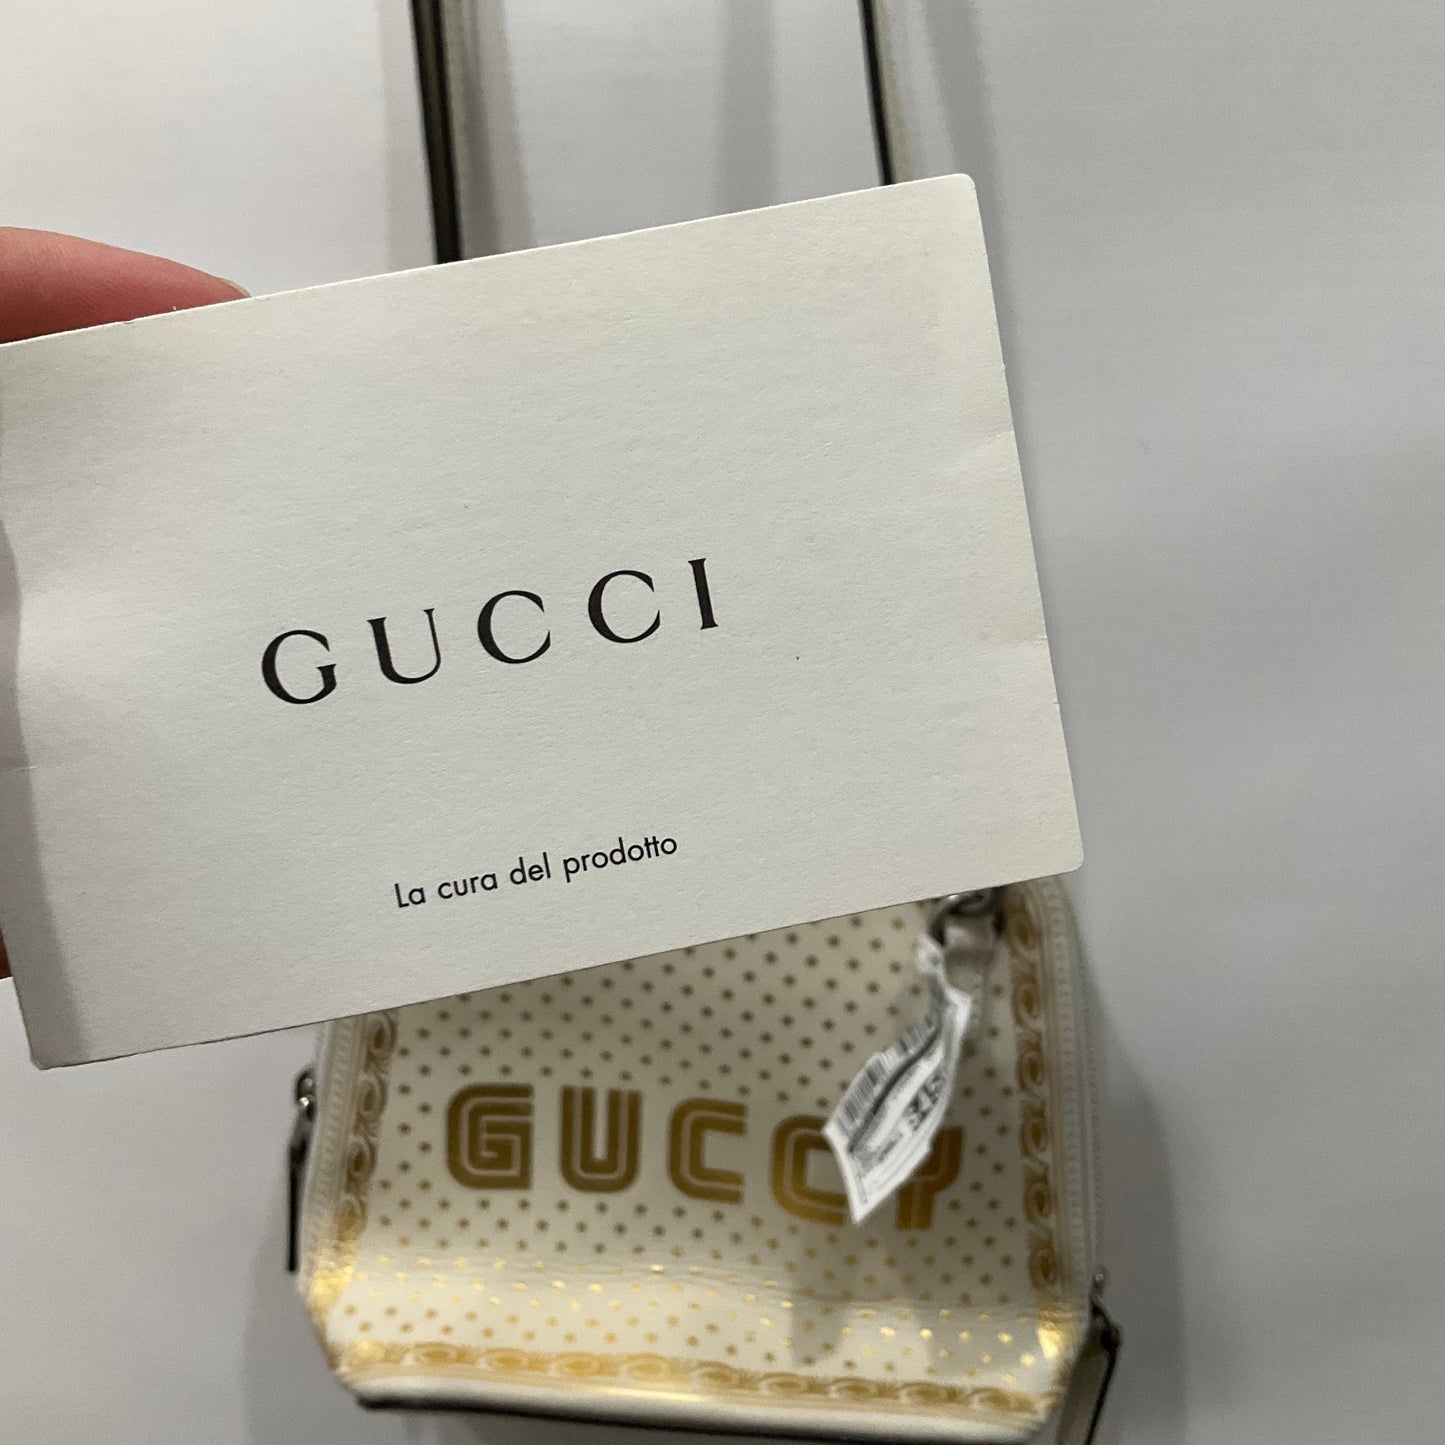 Crossbody Luxury Designer Gucci, Size Small